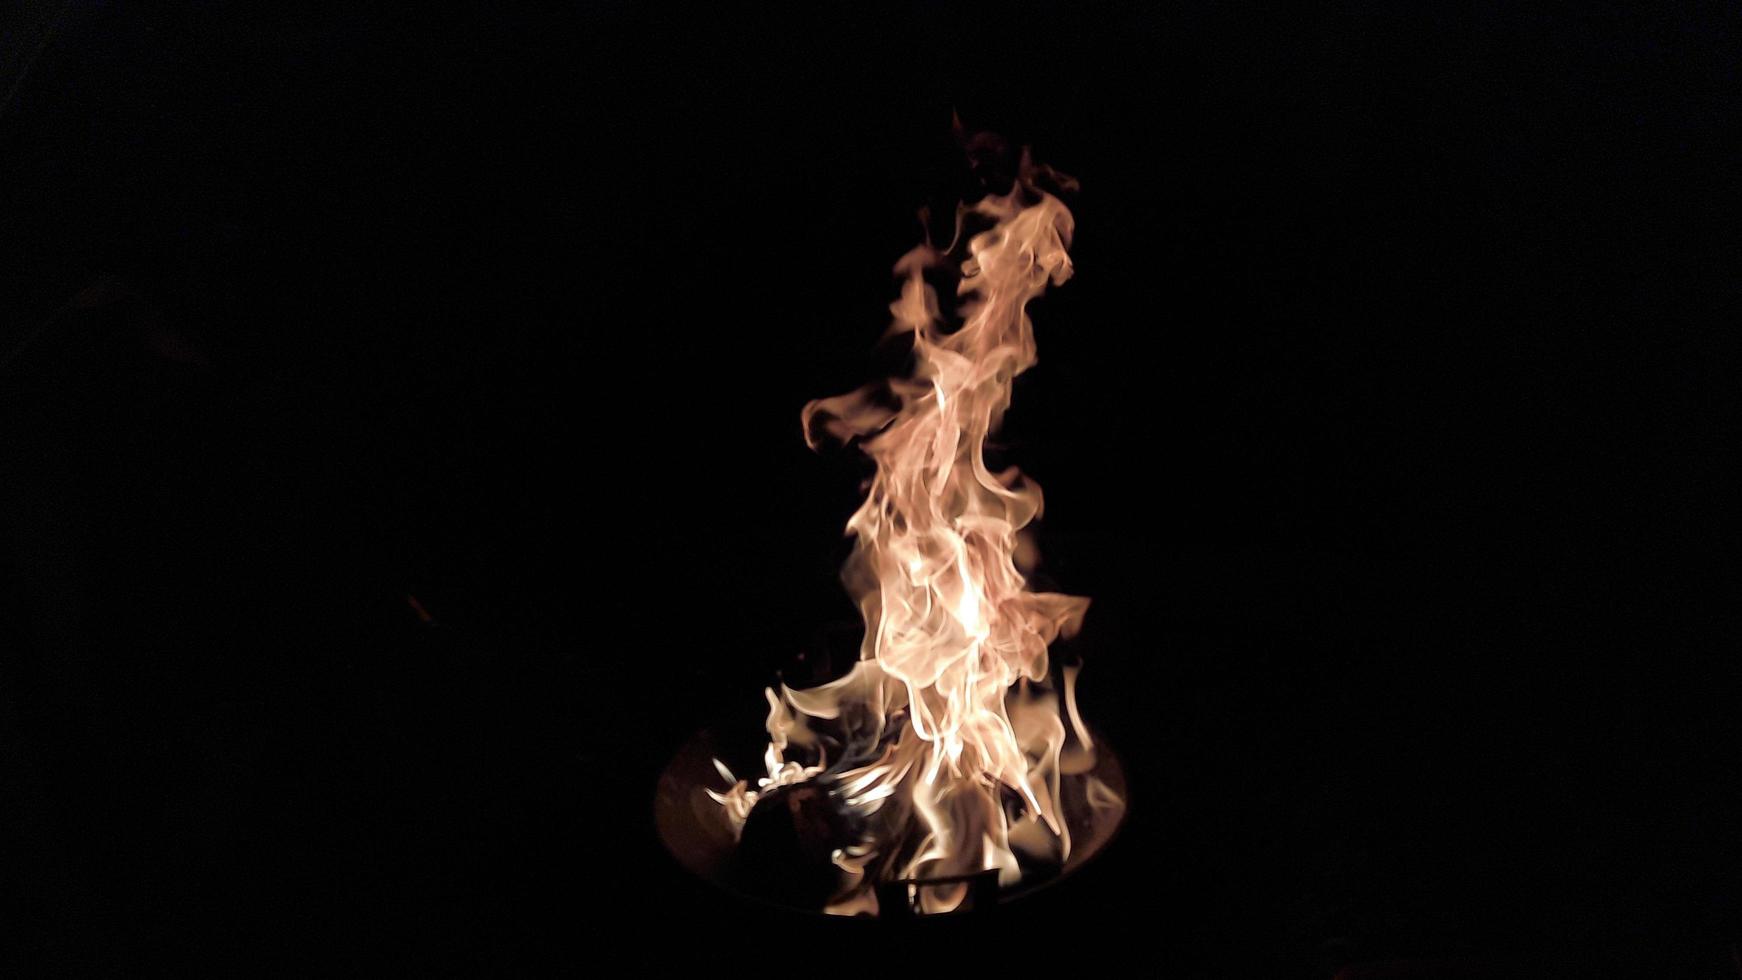 Burning fire on black background and landscape mode 11 photo